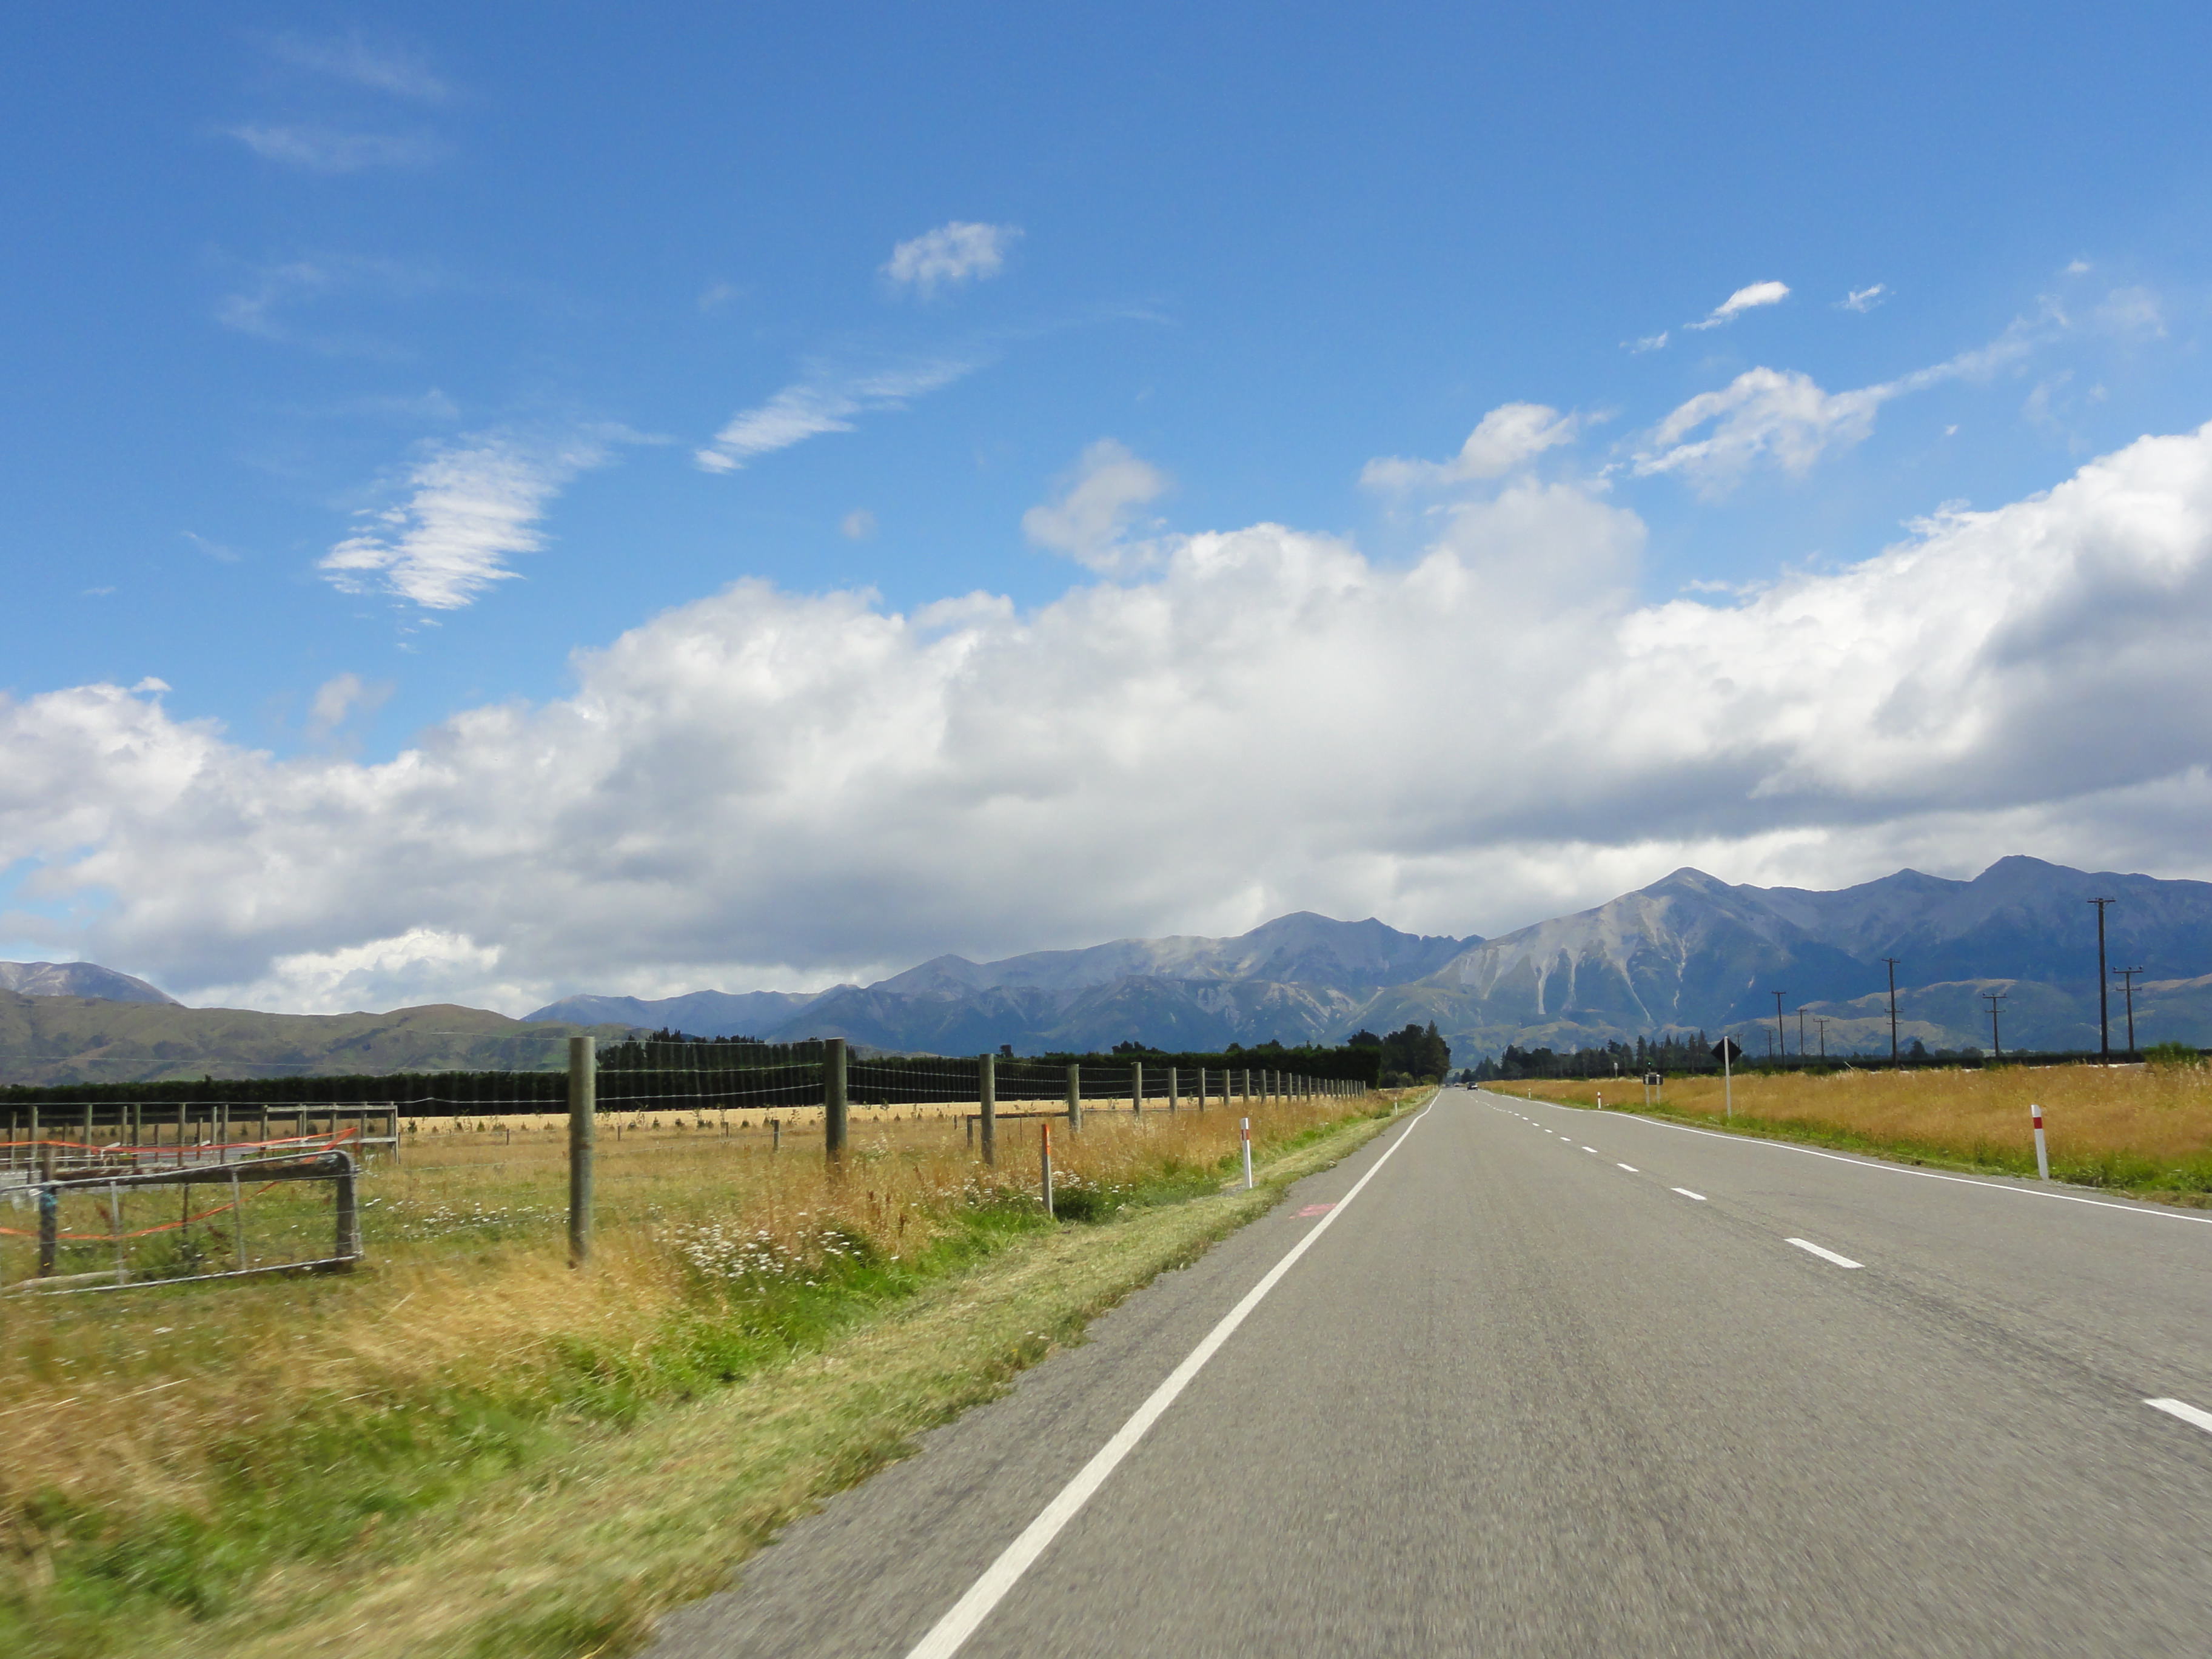 New Zealand road trip - Canterbury plains, South Island